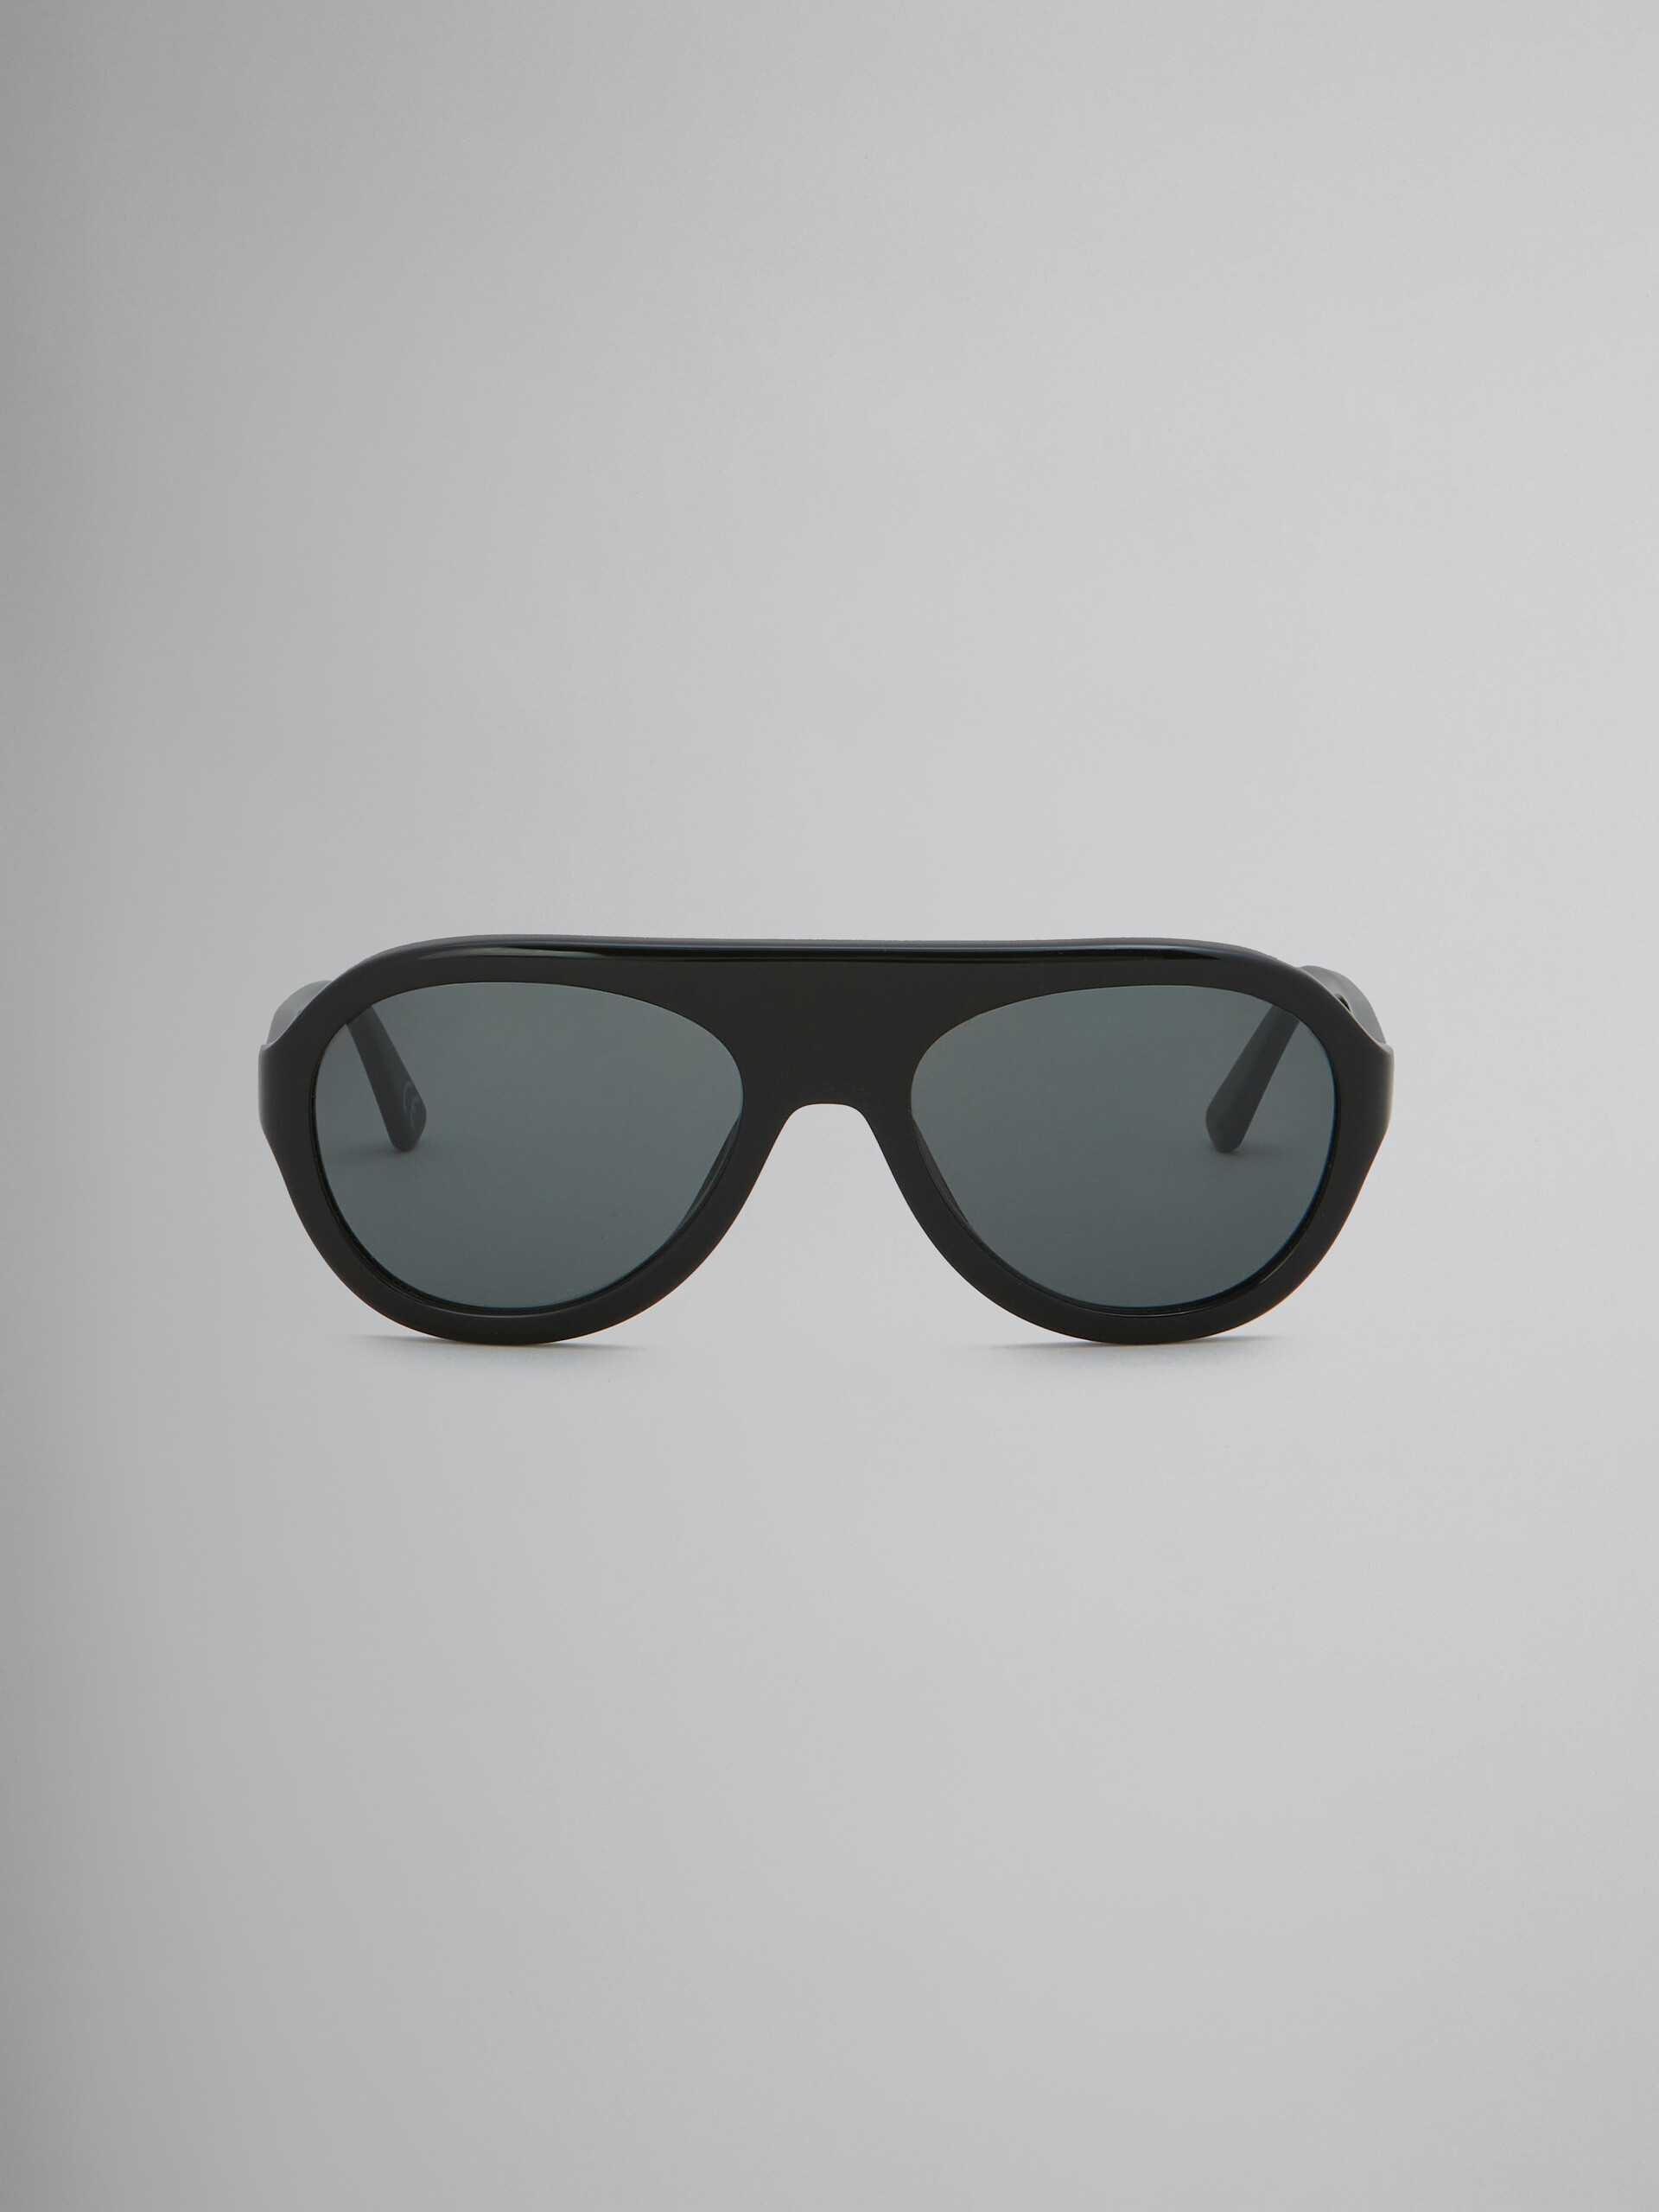 Mount Toc black acetate aviator sunglasses - Optical - Image 1